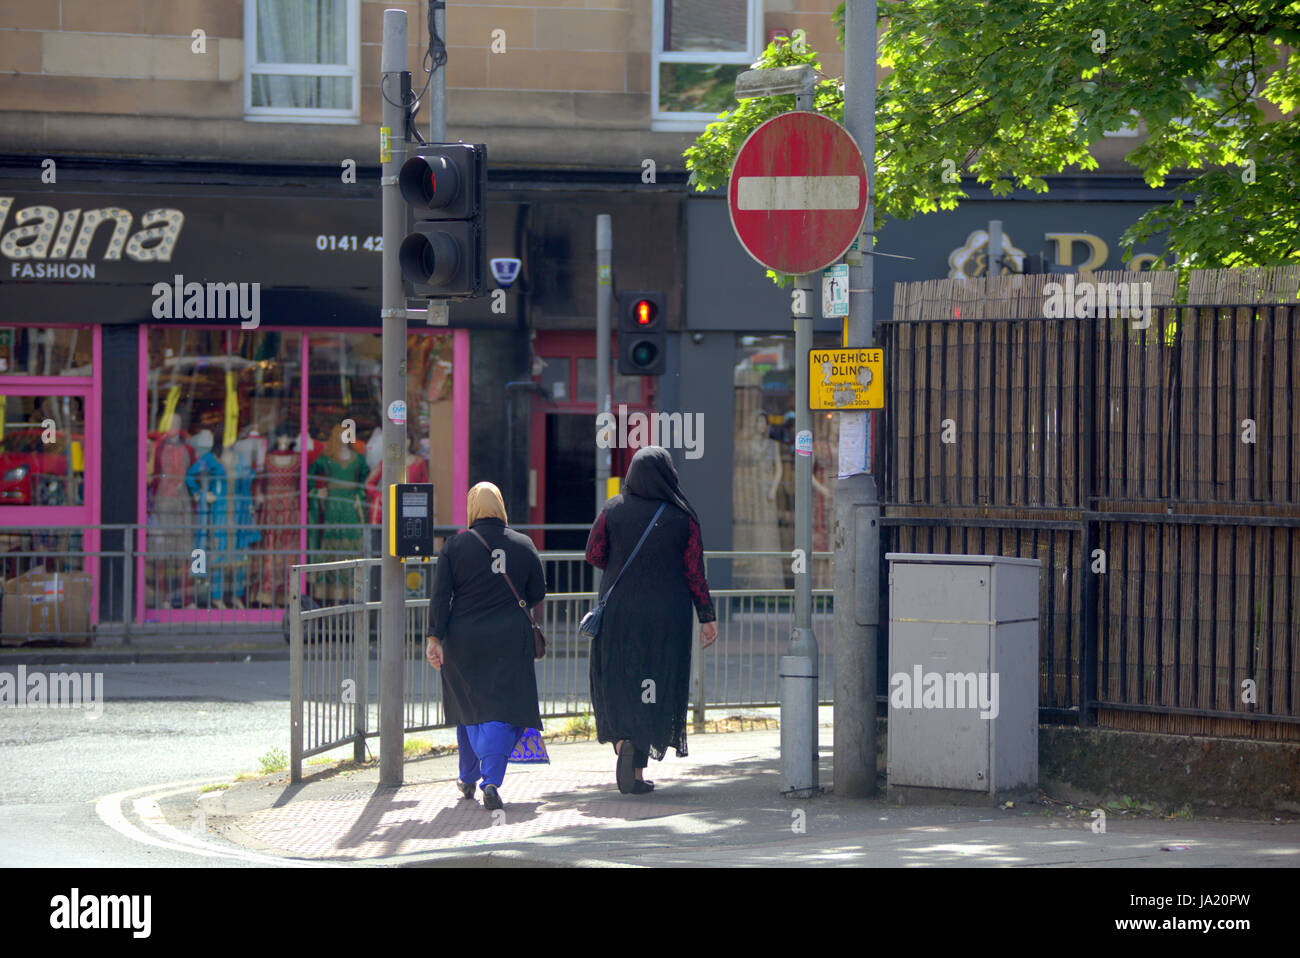 hijab scarf wearing Muslim on British street mo entry sign Stock Photo